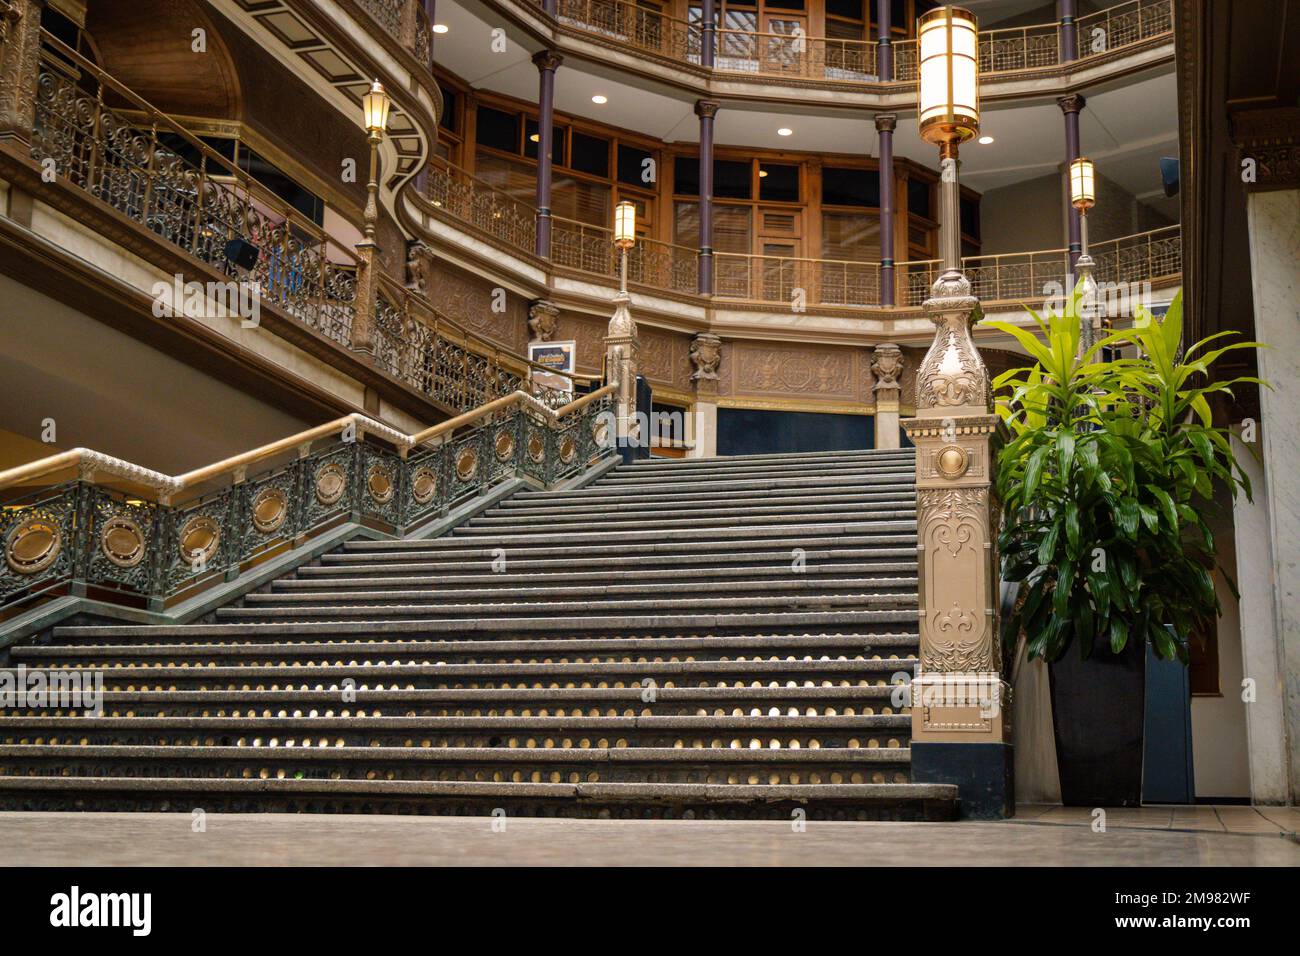 The luxury Arcade Shopping Center and Hotel inside, Cleveland, USA Stock Photo